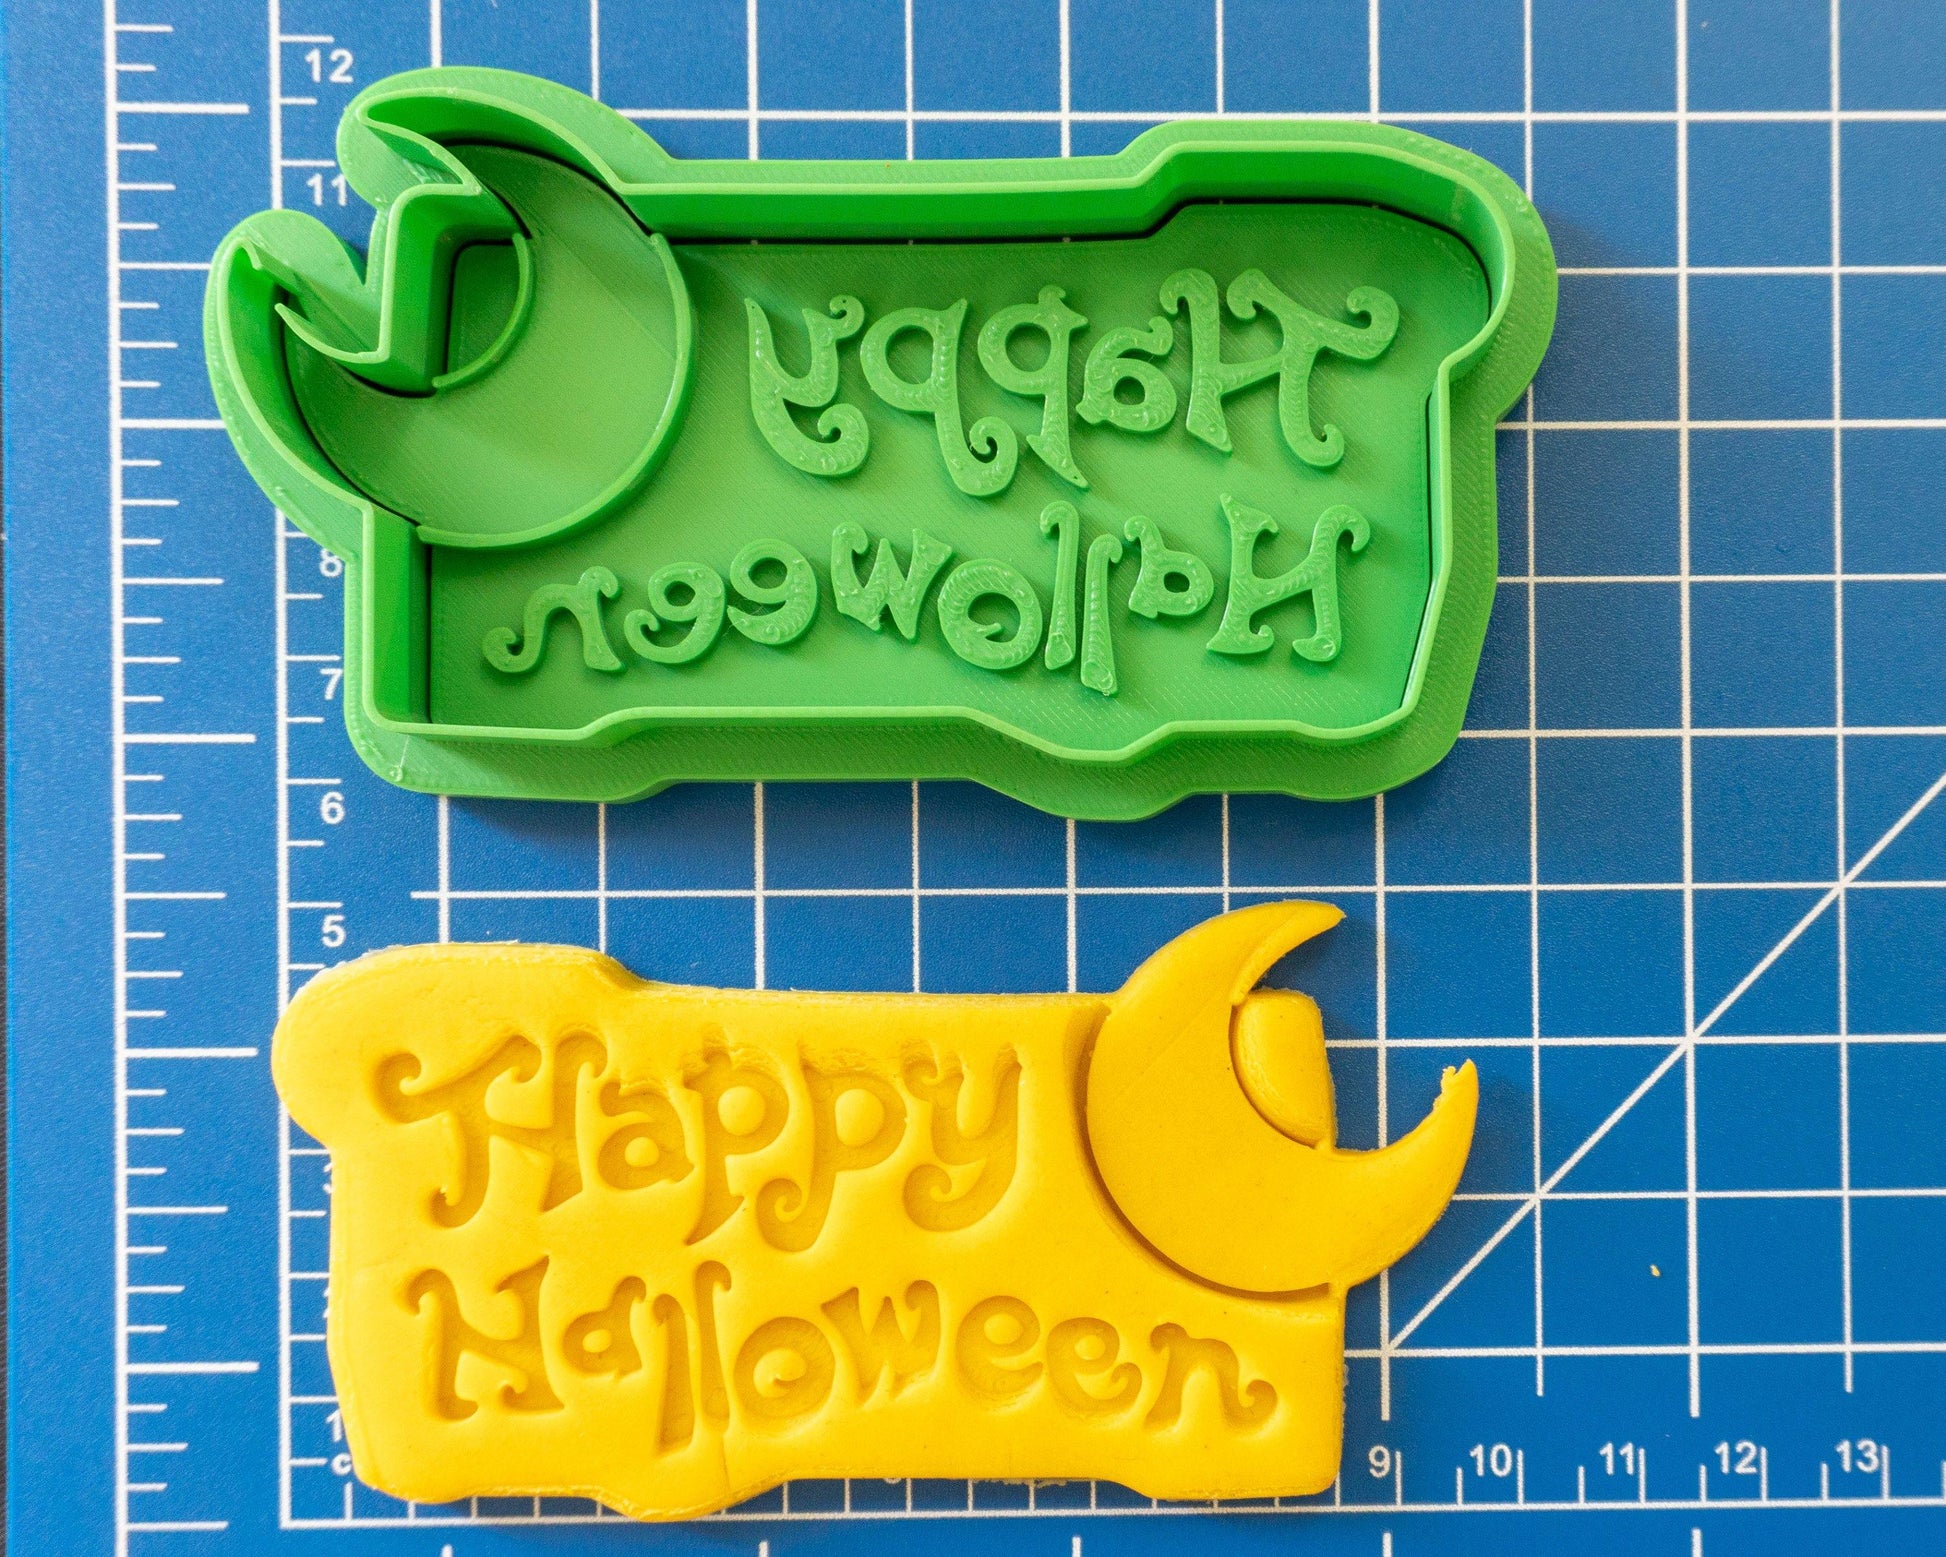 Happy Hlloween Cookie Cutter Text Season Greetings Custom Cookie Cutter - Malta Cookie Cutters